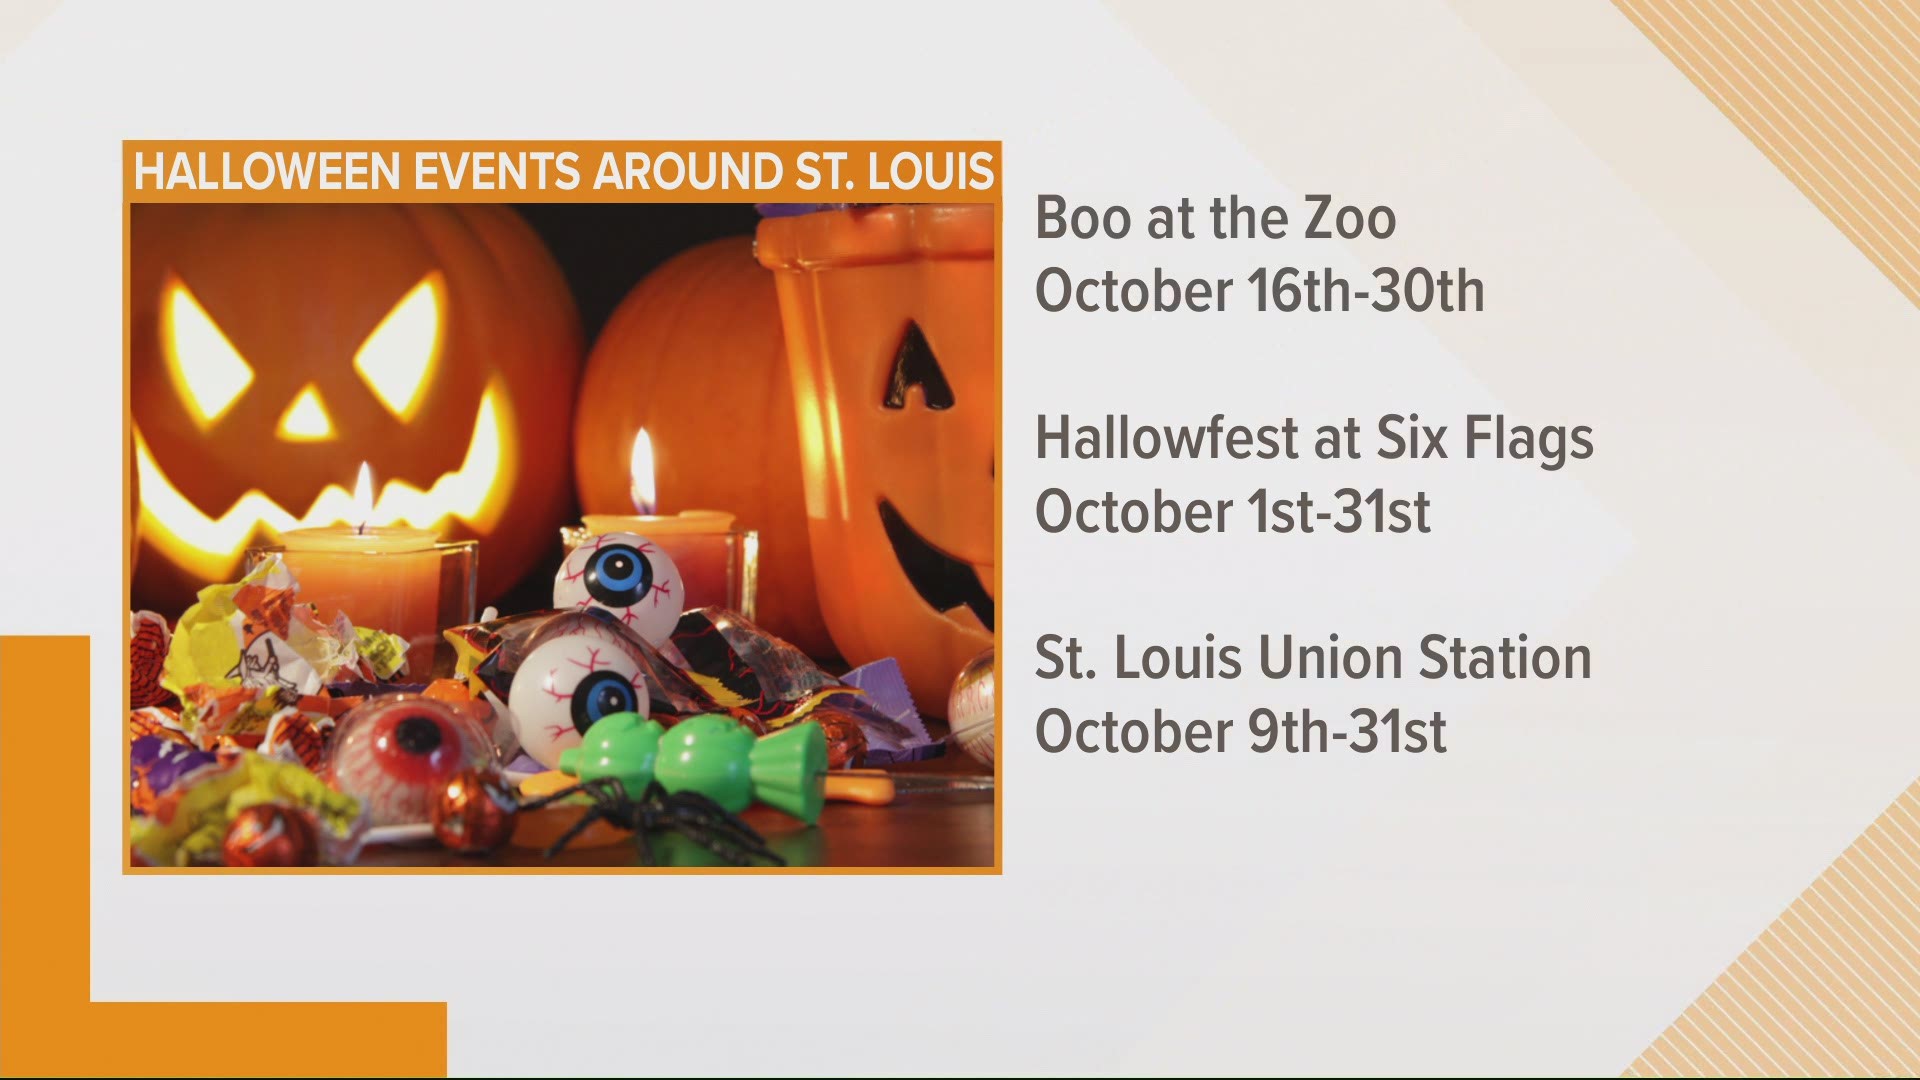 Halloween events happening around St. Louis